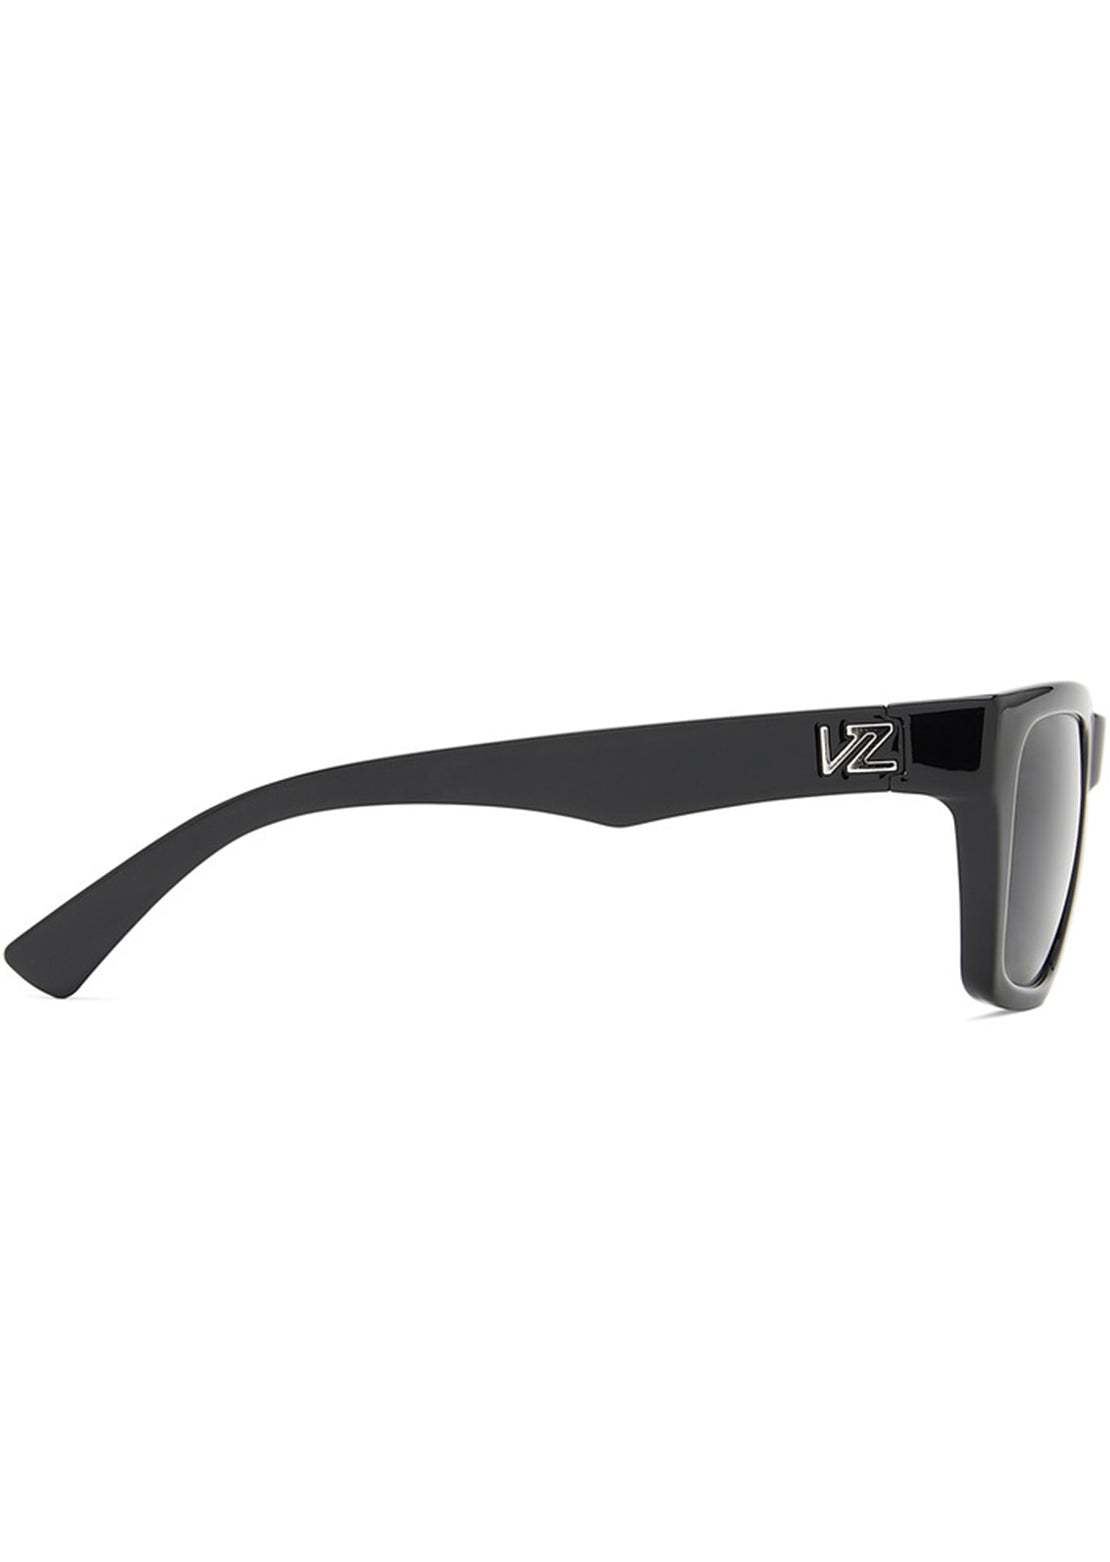 Von Zipper Mode Sunglasses Black Gloss/ Grey